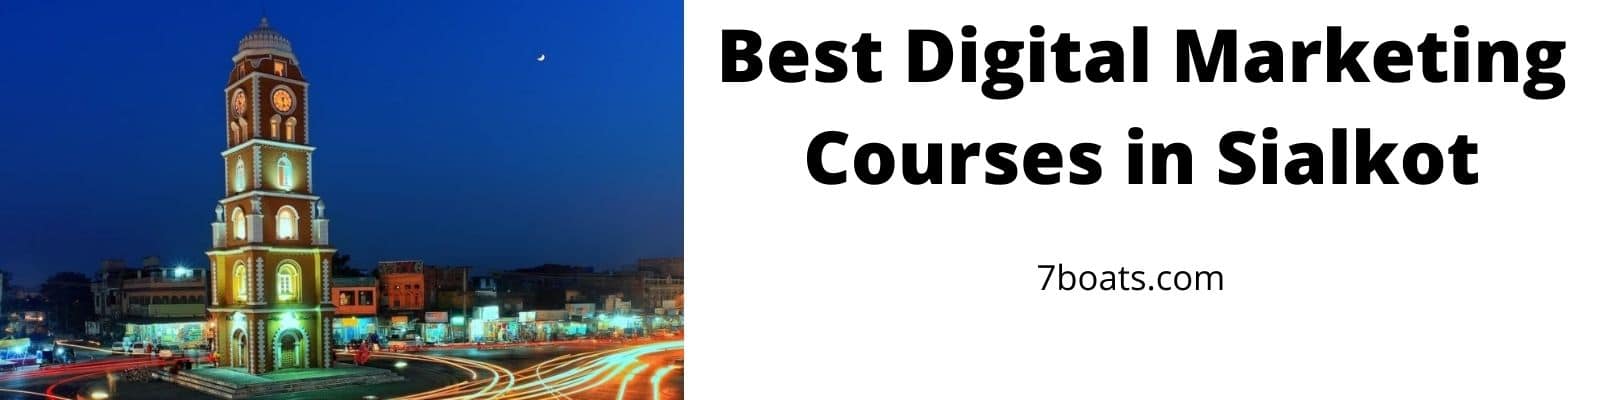 5 Best Digital Marketing Courses in Sialkot